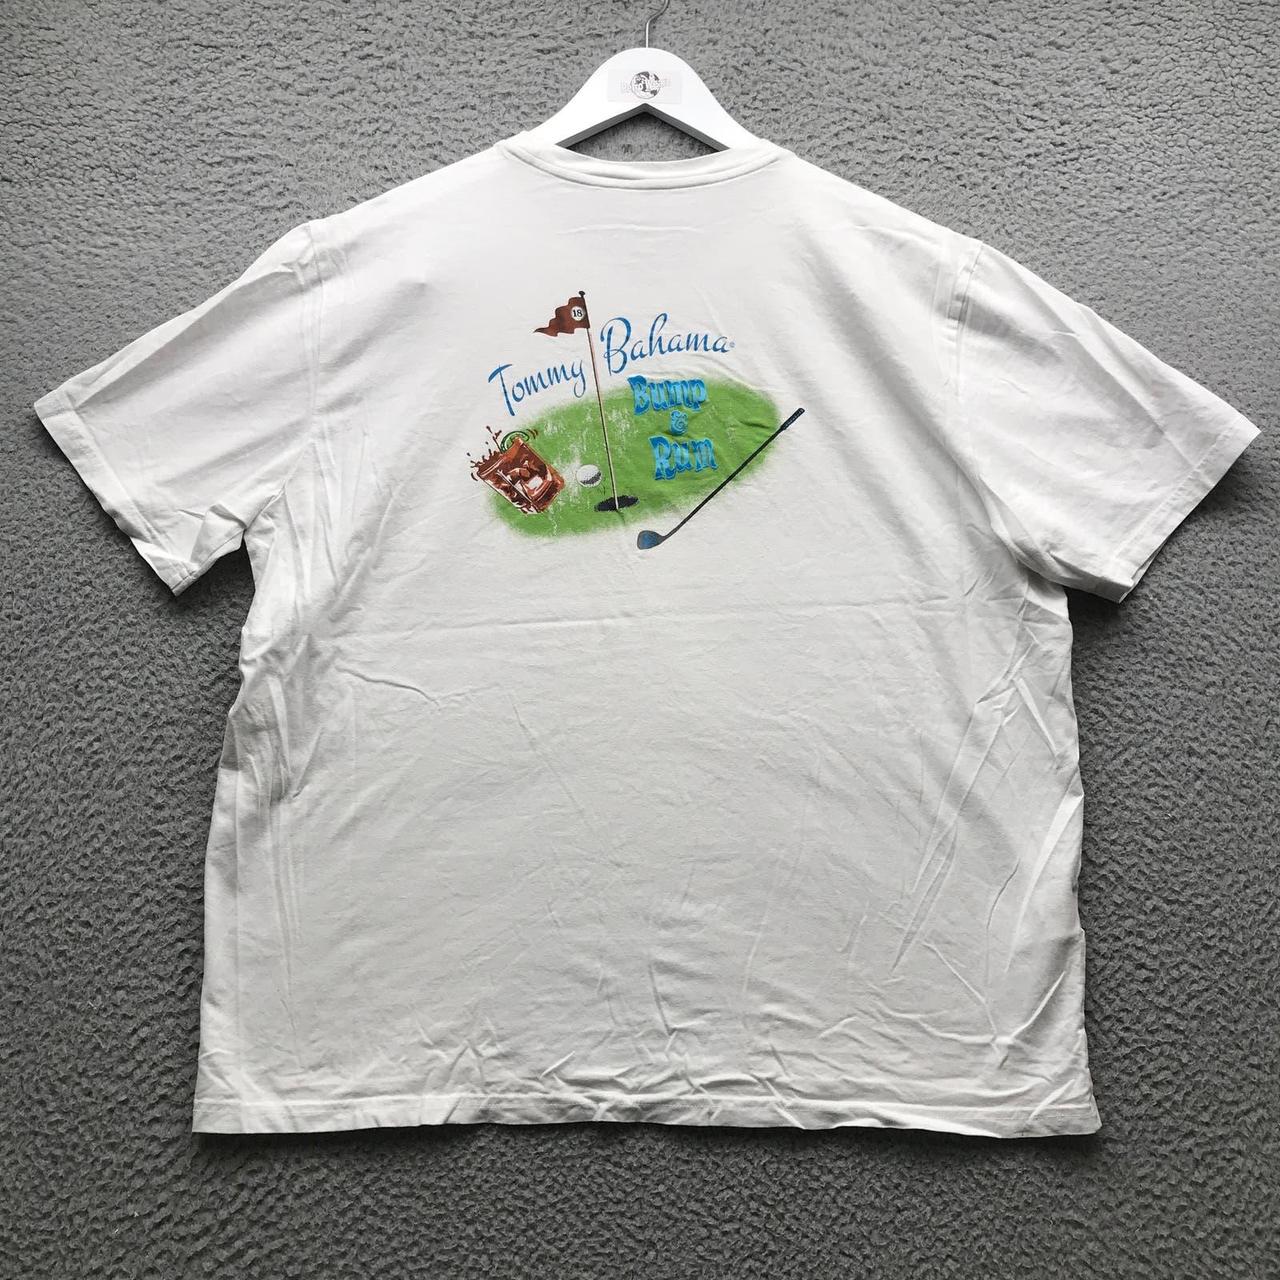 Tommy Bahama Men's T-Shirt - White - XL